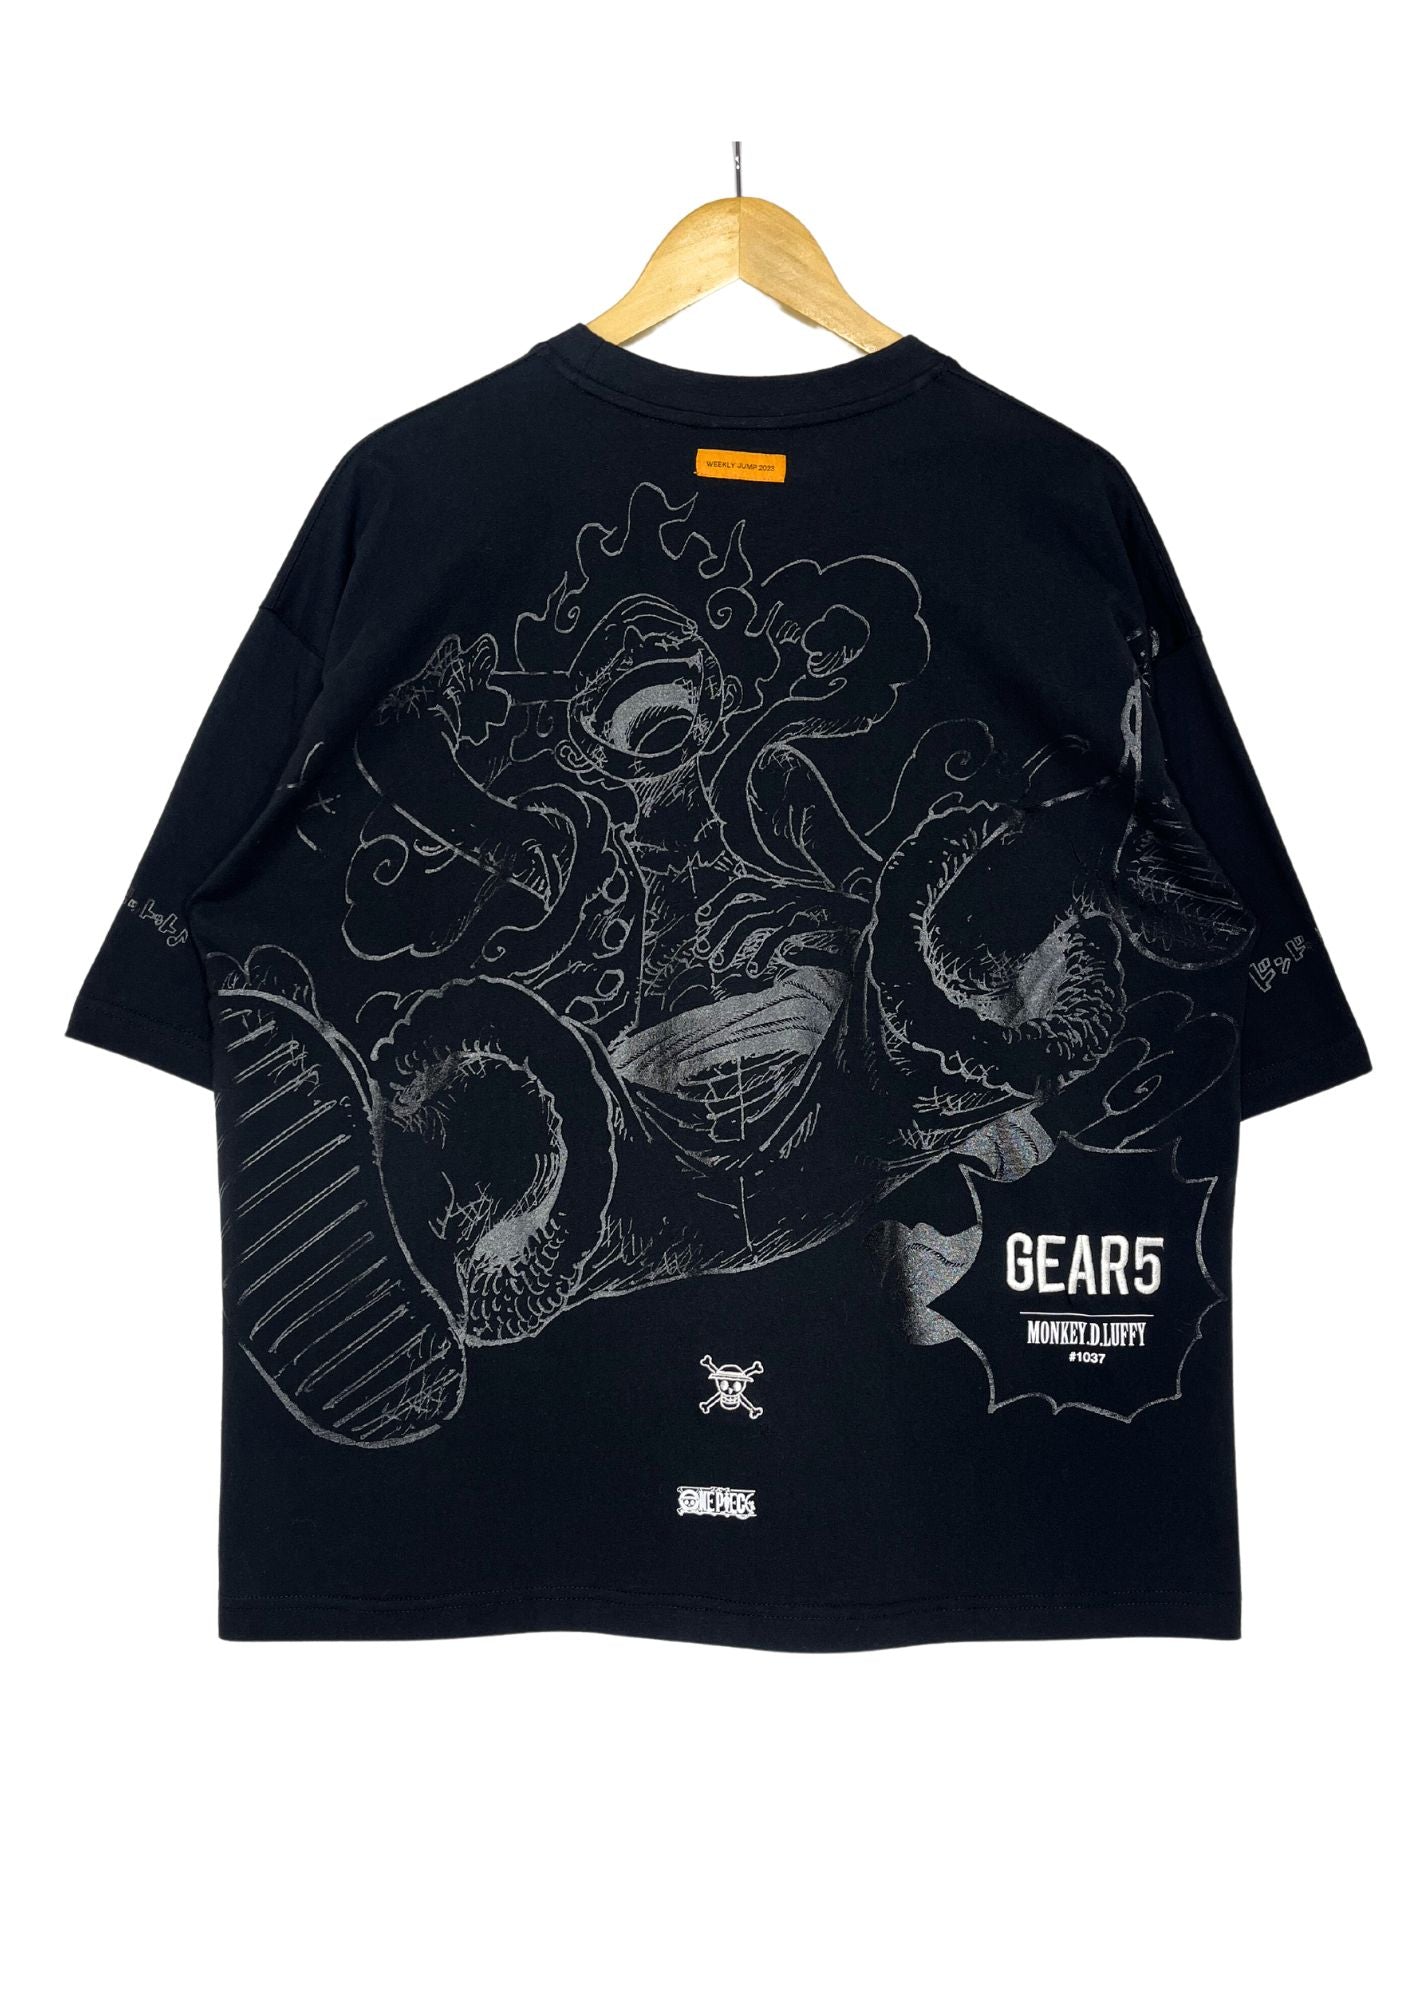 One Piece x Shonen Jump Weekly 500 Limited Nika Gear 5 Big Type T-shirt x